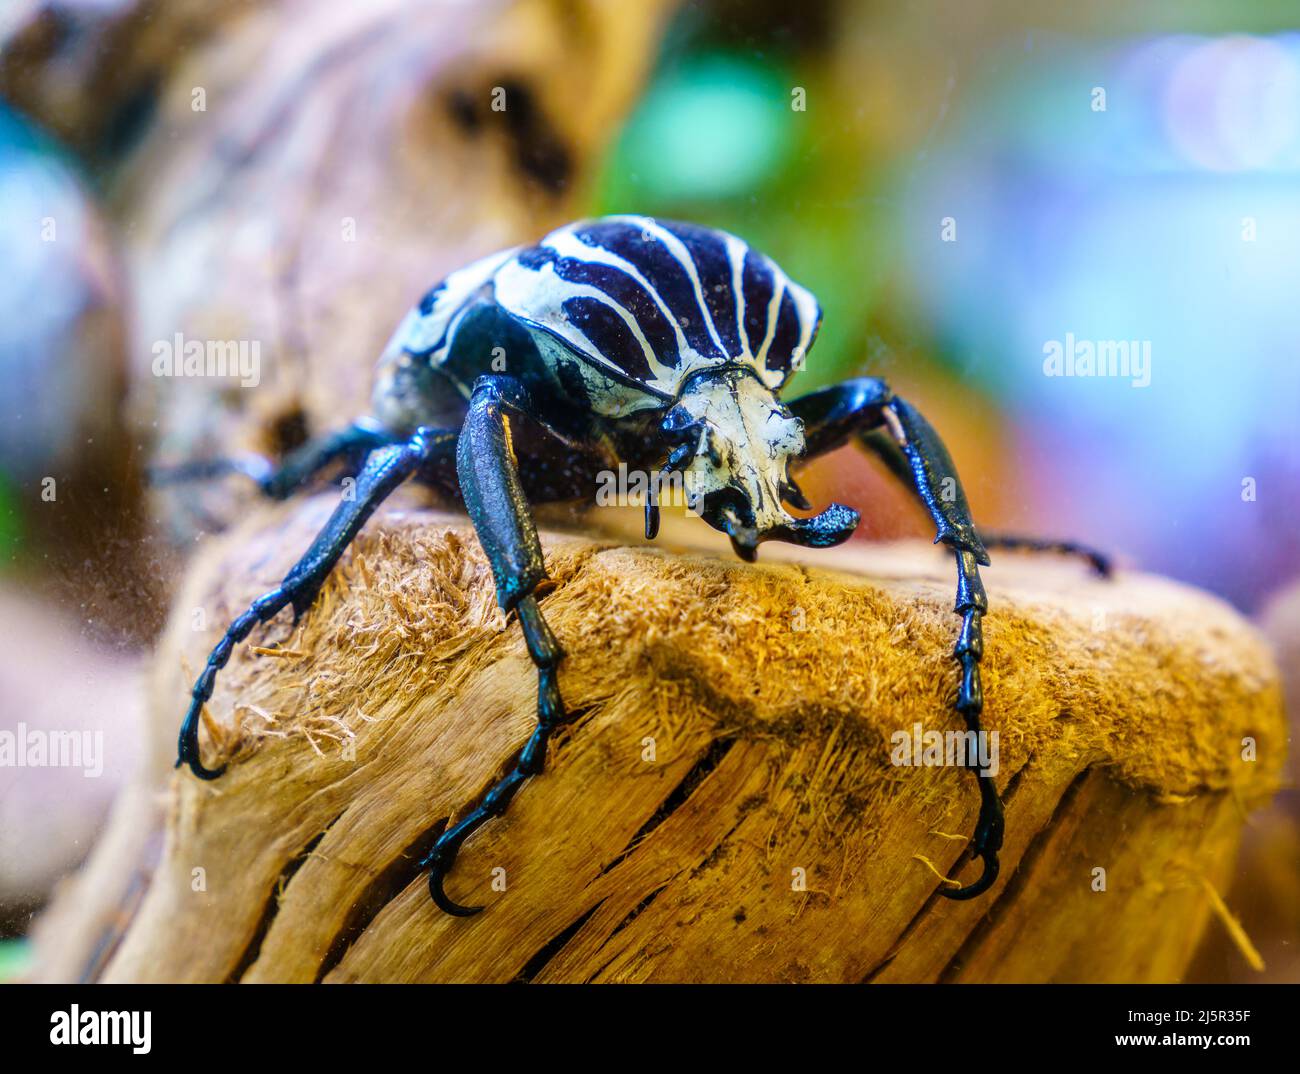 Close-up image of Goliath Beetle (Goliathus goliatus) in its natural habitat Stock Photo